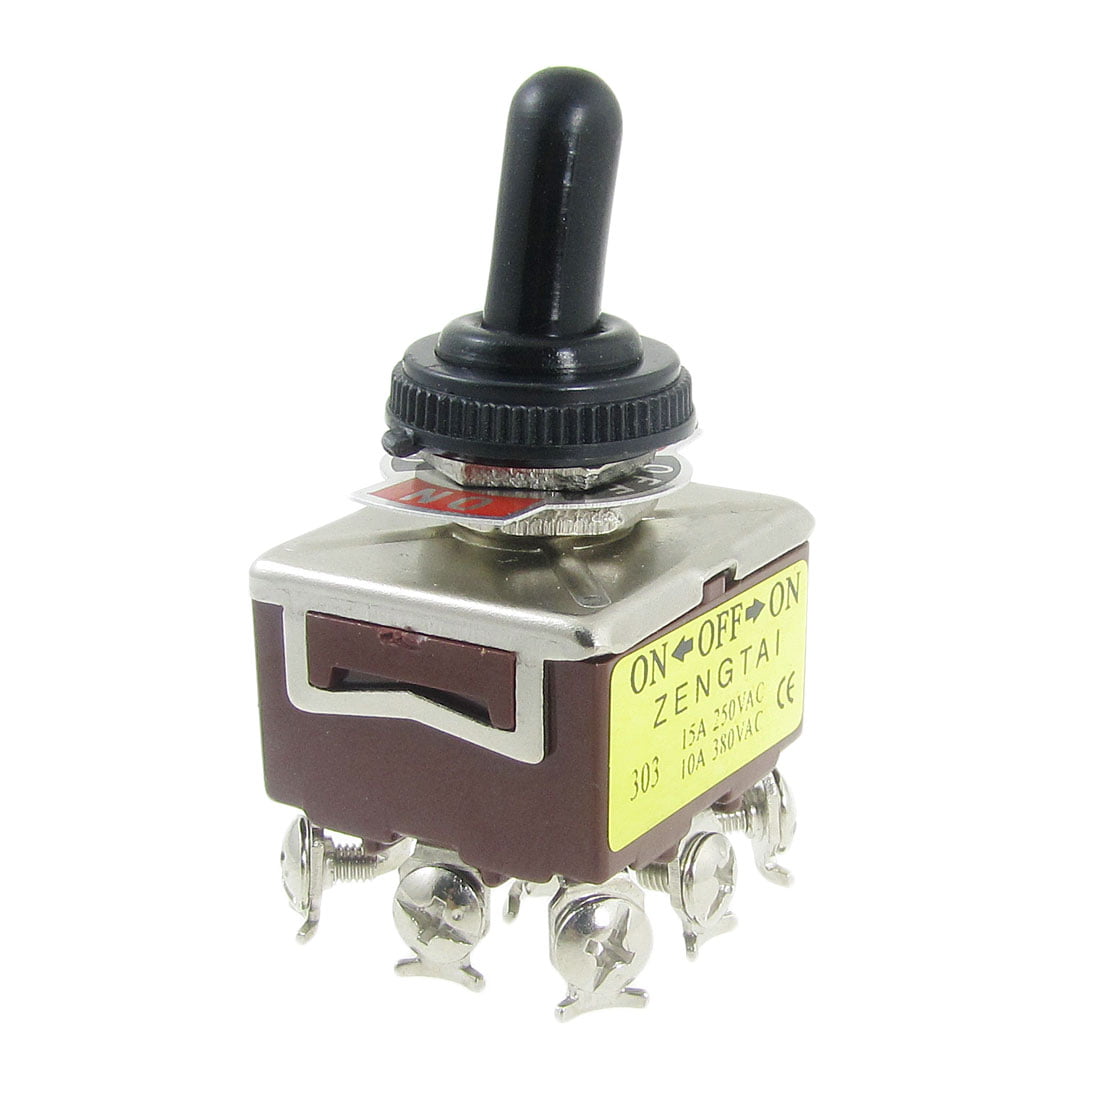 20A 110v-120v 15A 250v Rocker Switch 3PDT ON-OFF Power Indicator Light Bulb